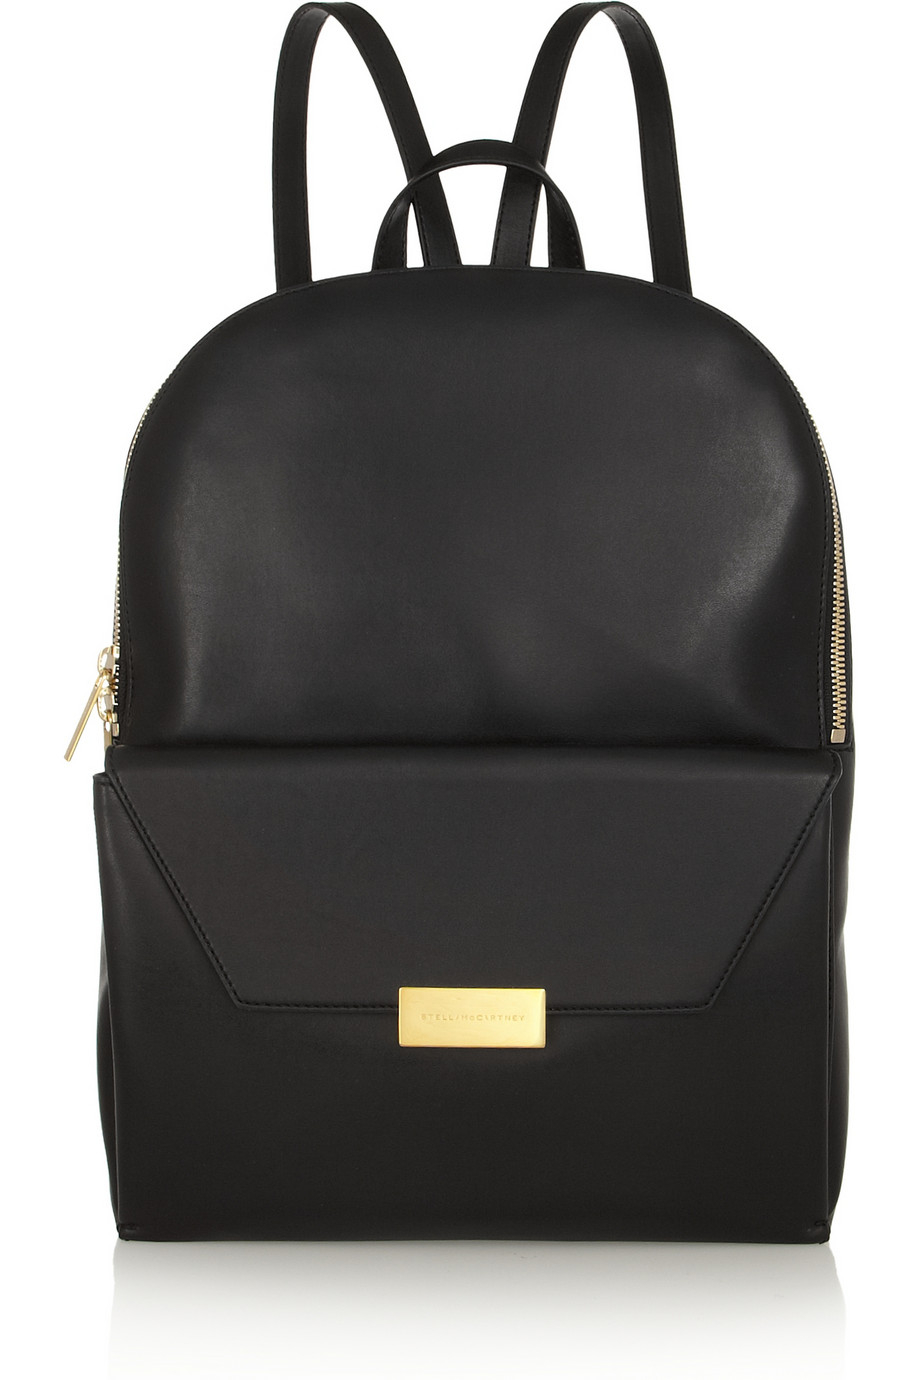 Stella McCartney Beckett Faux Leather Backpack in Black - Lyst